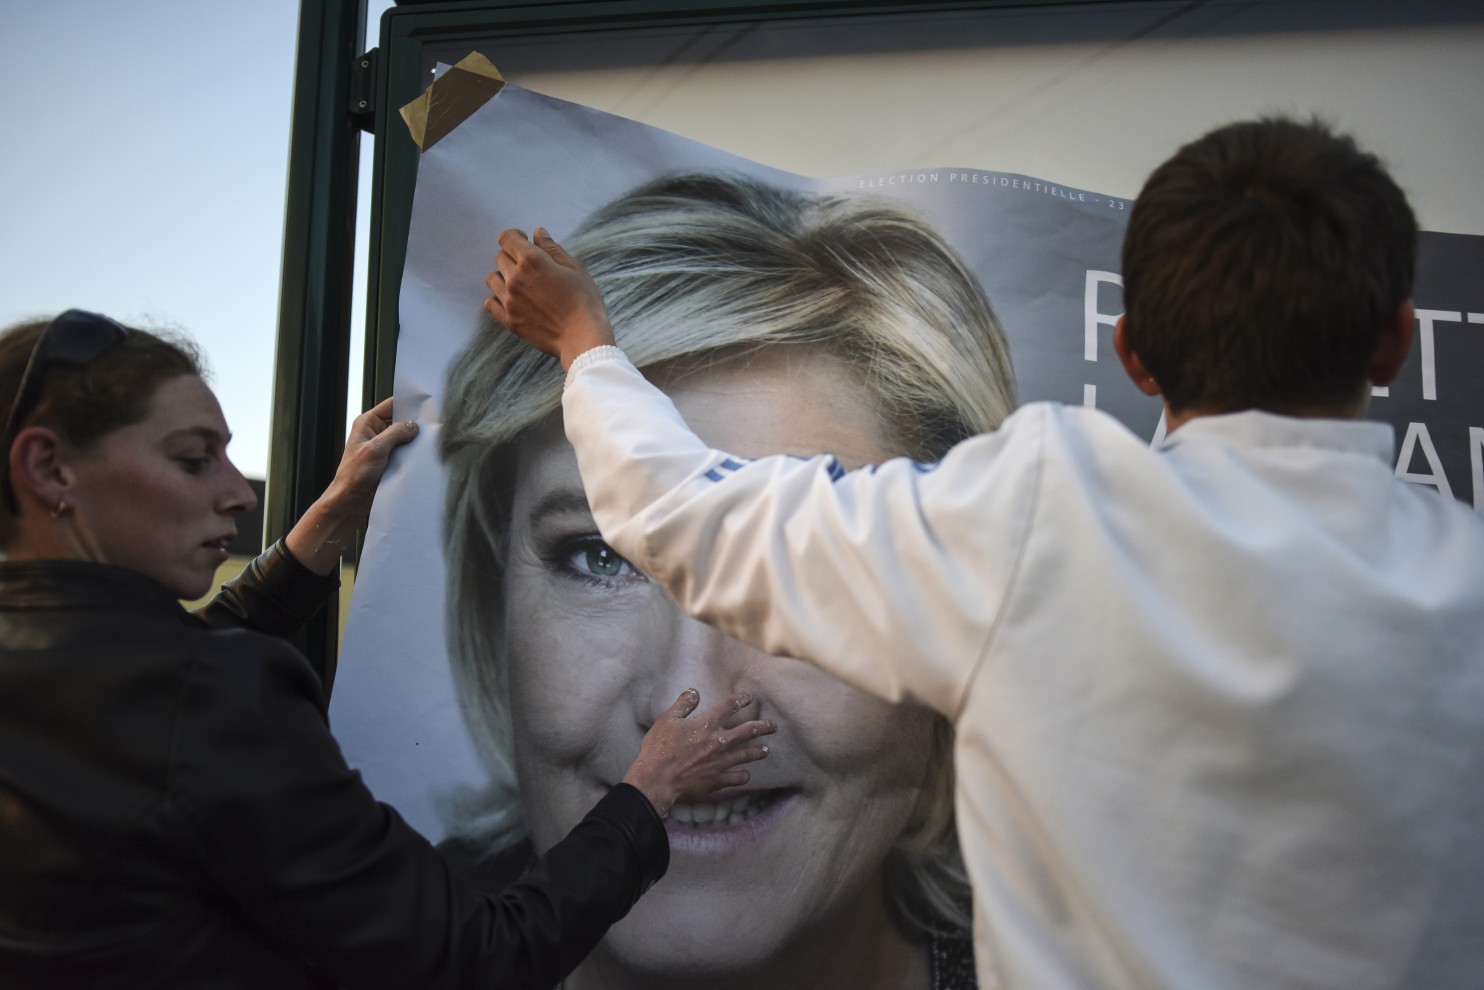  Growing anti-Muslim rhetoric permeates French presidential election campaign